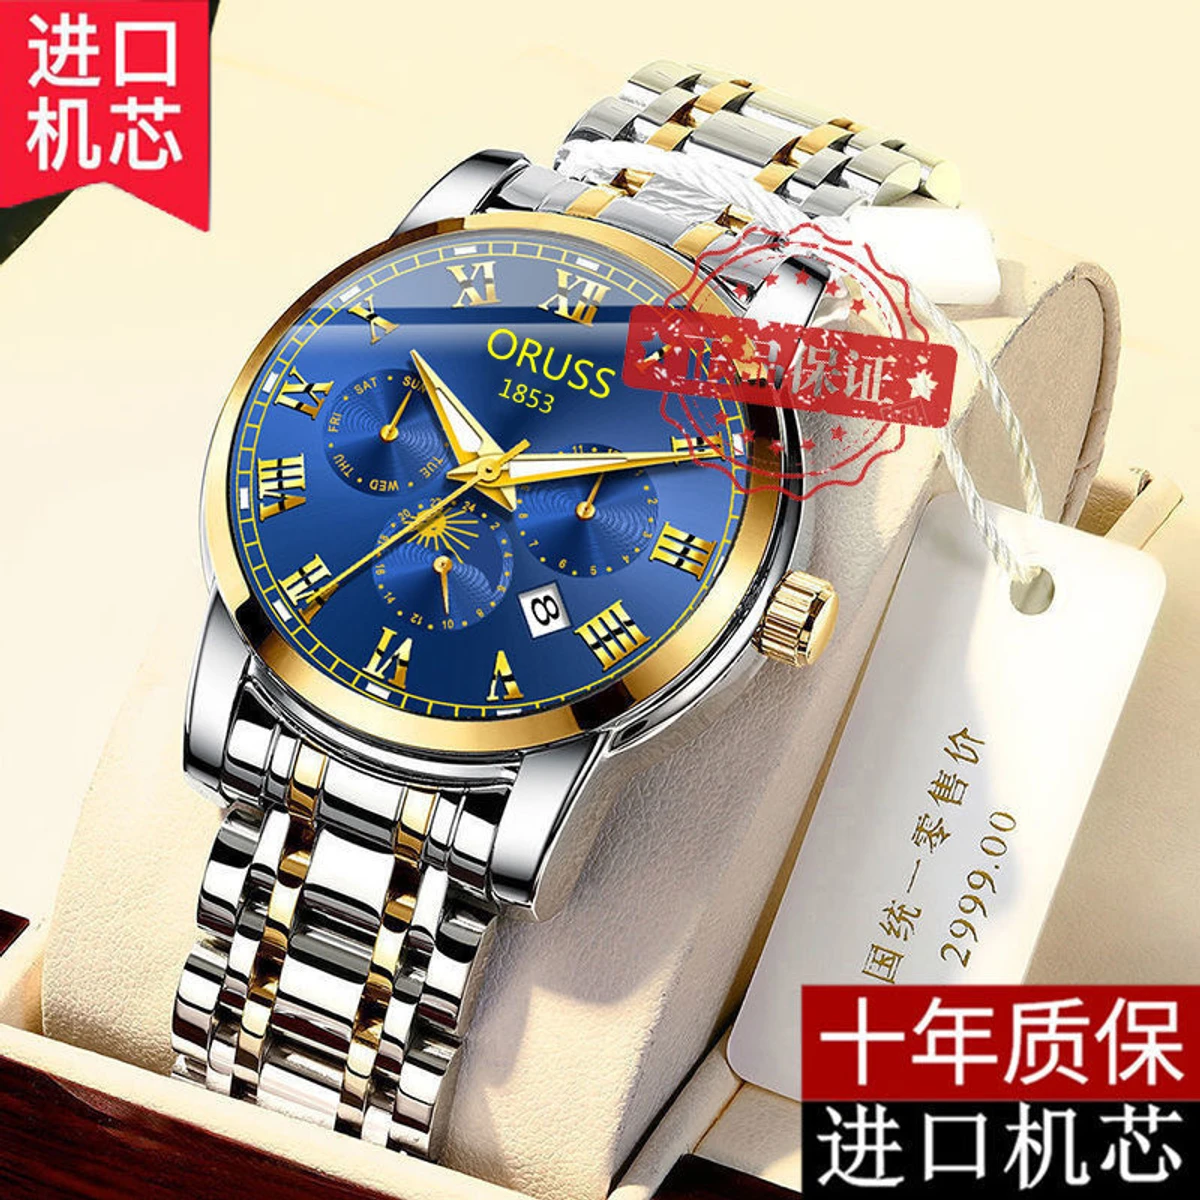 Original ORUSS SENO Men Waterproof Simple Ultra-Thin Luxury Business Fashion Watch Calendar- Blue & Silver